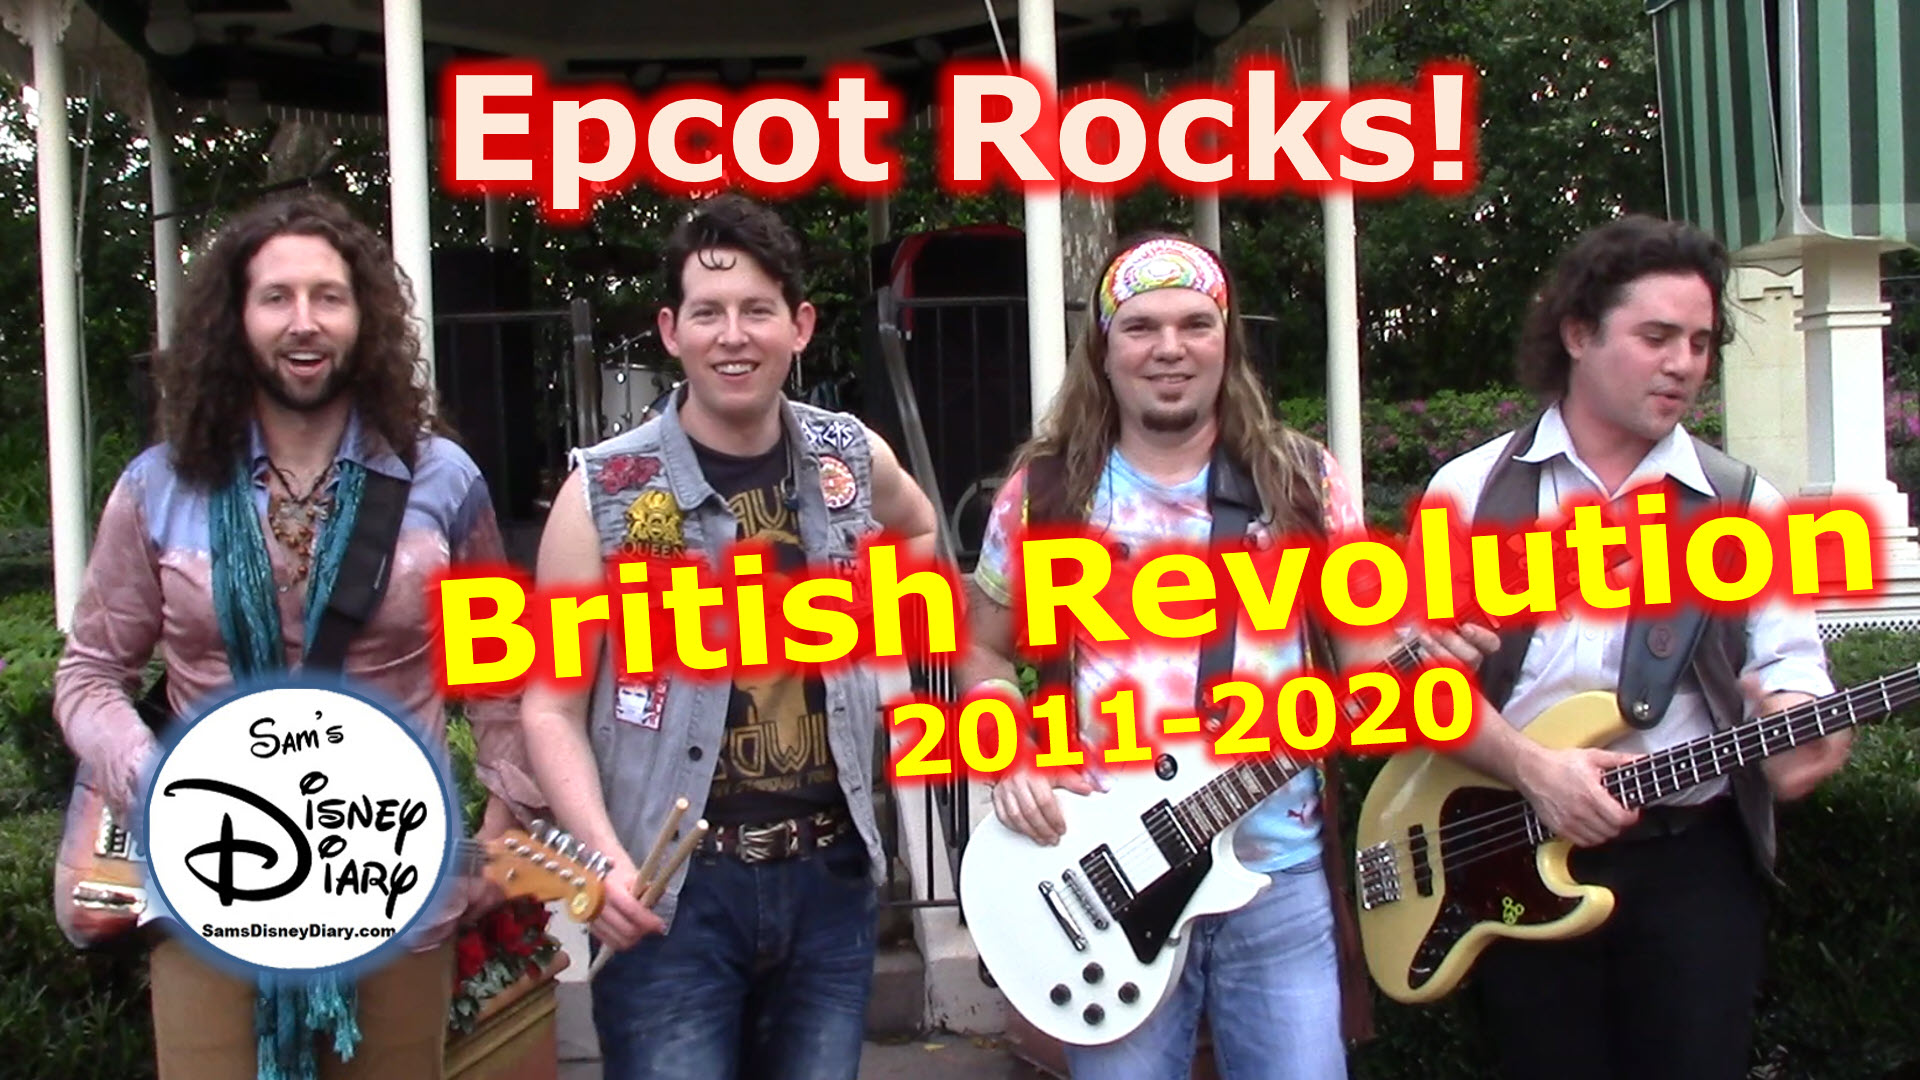 Rocking Epcot with British Revolution